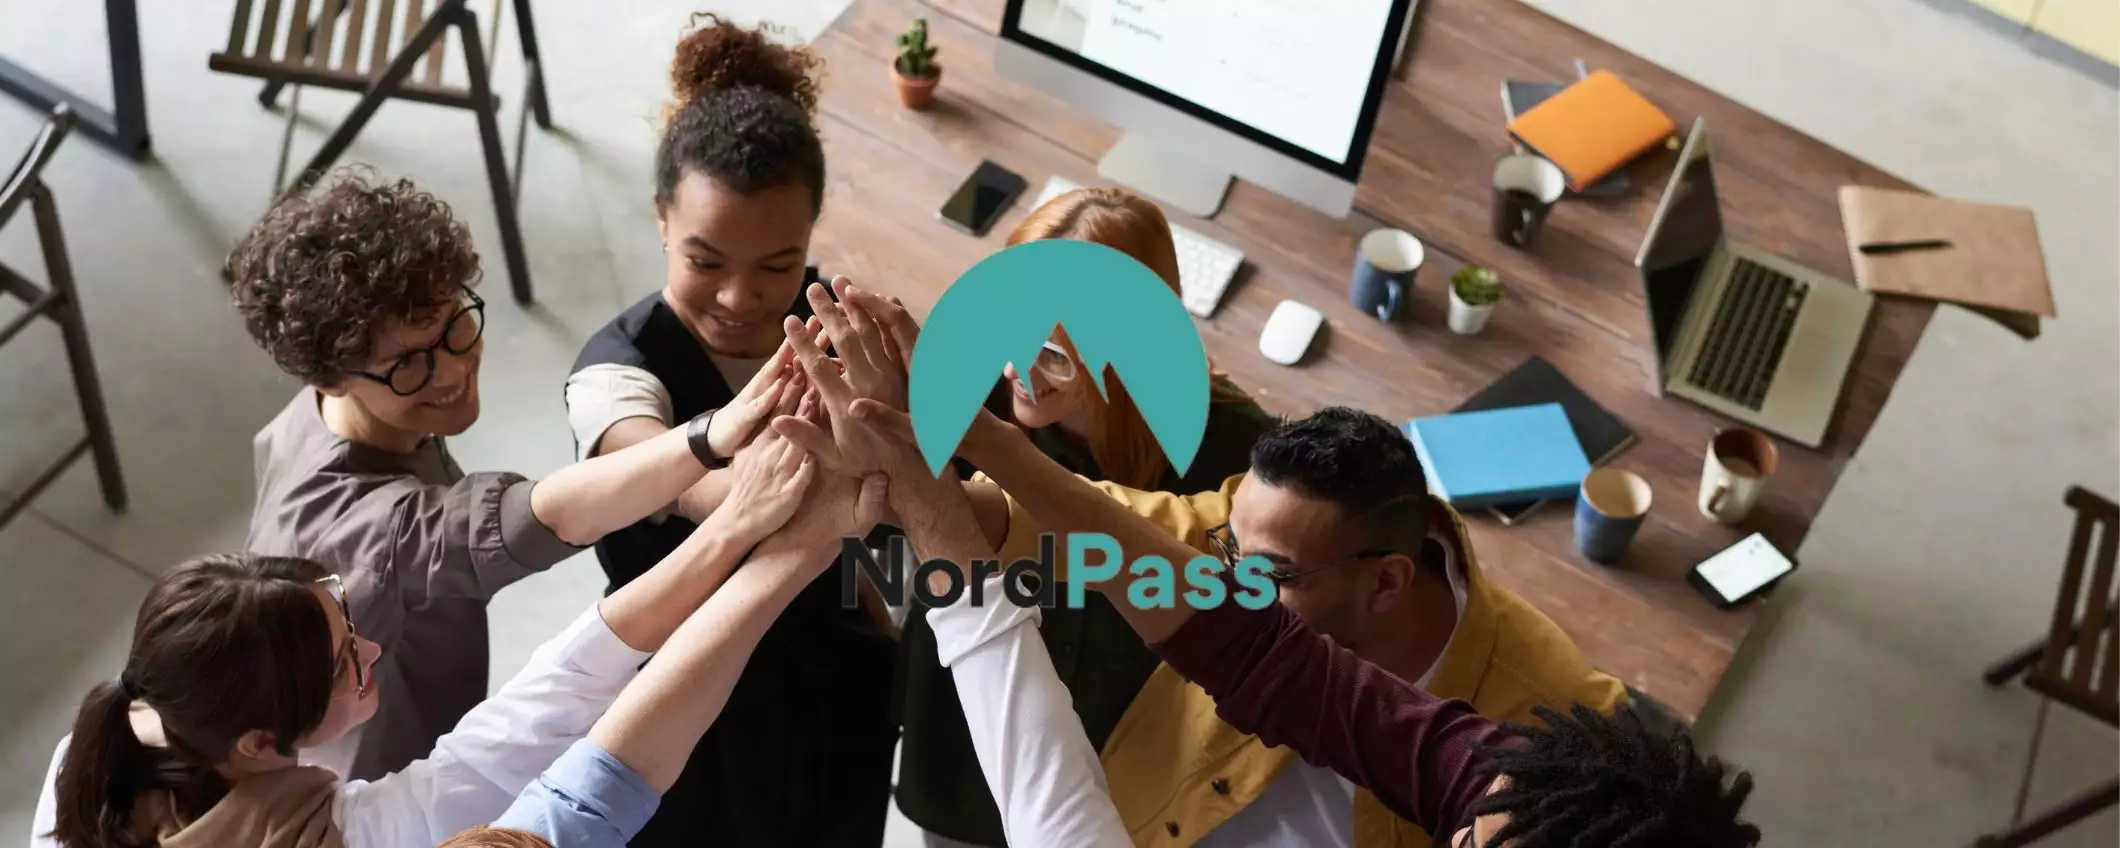 NordPass, per te gestore password aziendale a soli 1,79€/mese